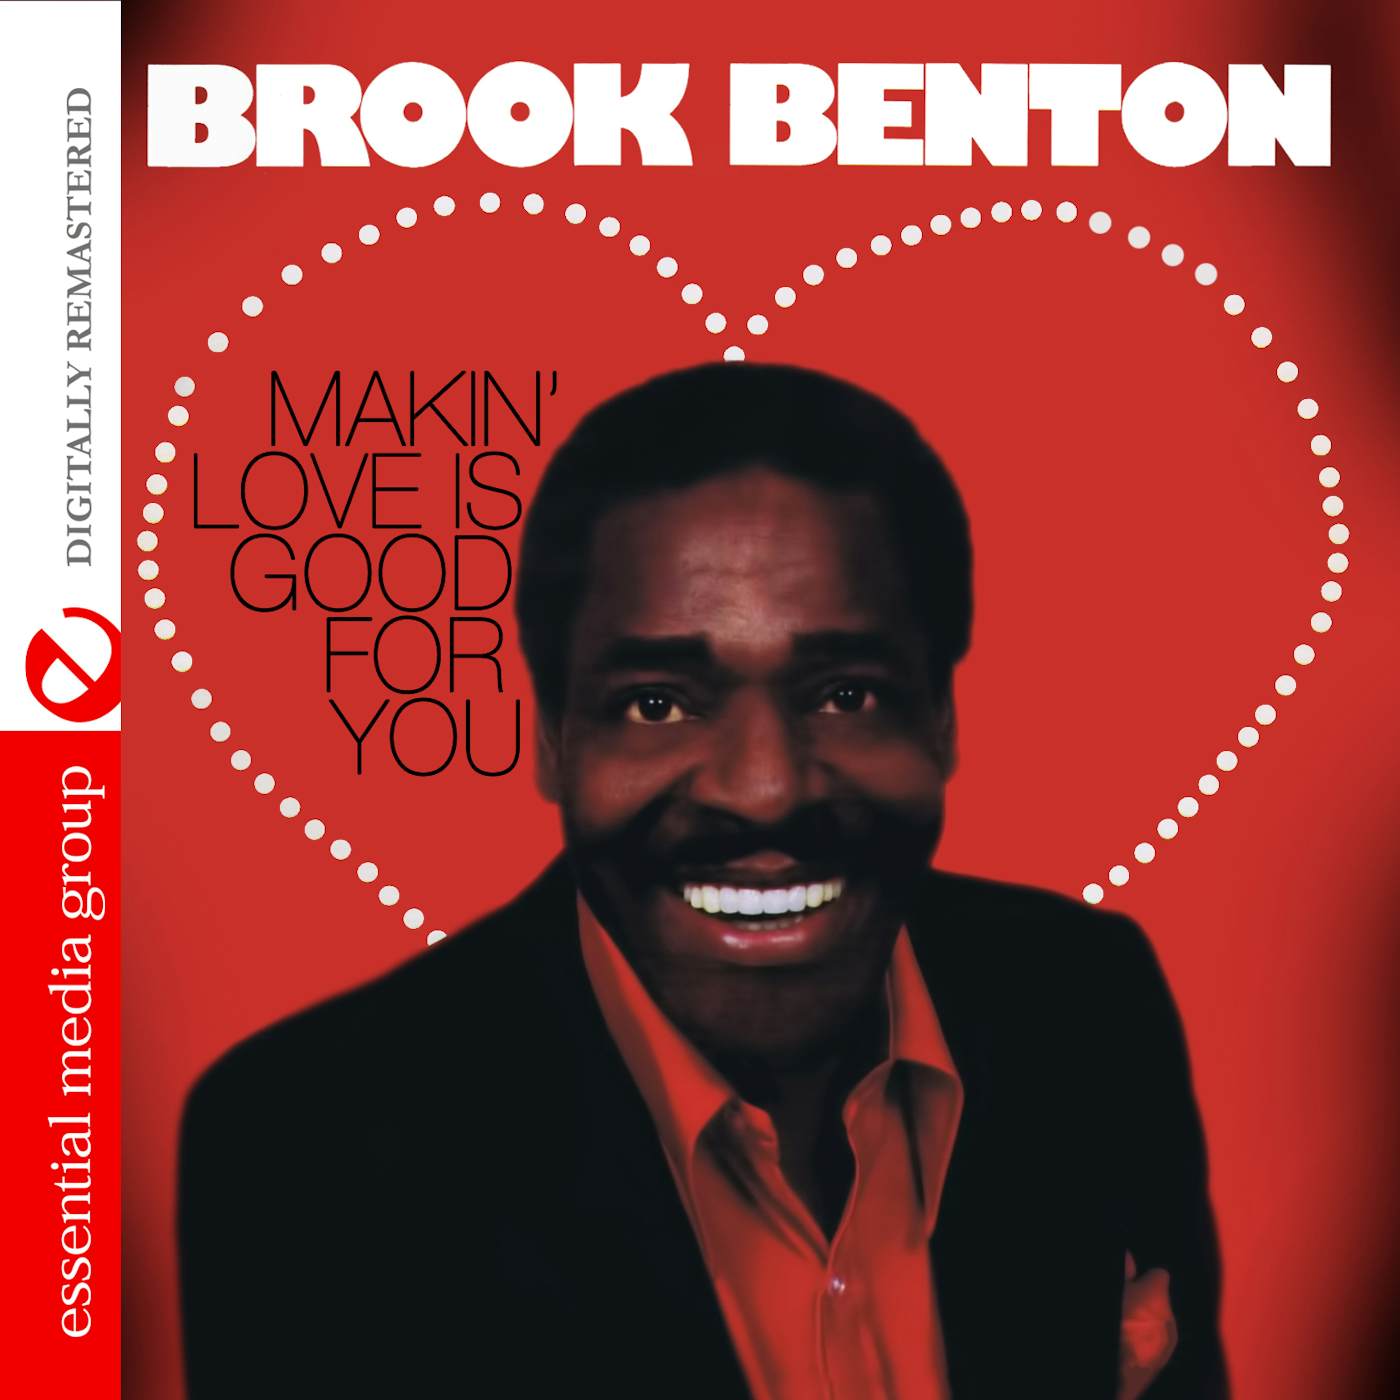 Brook Benton MAKIN LOVE IS GOOD FOR YOU CD